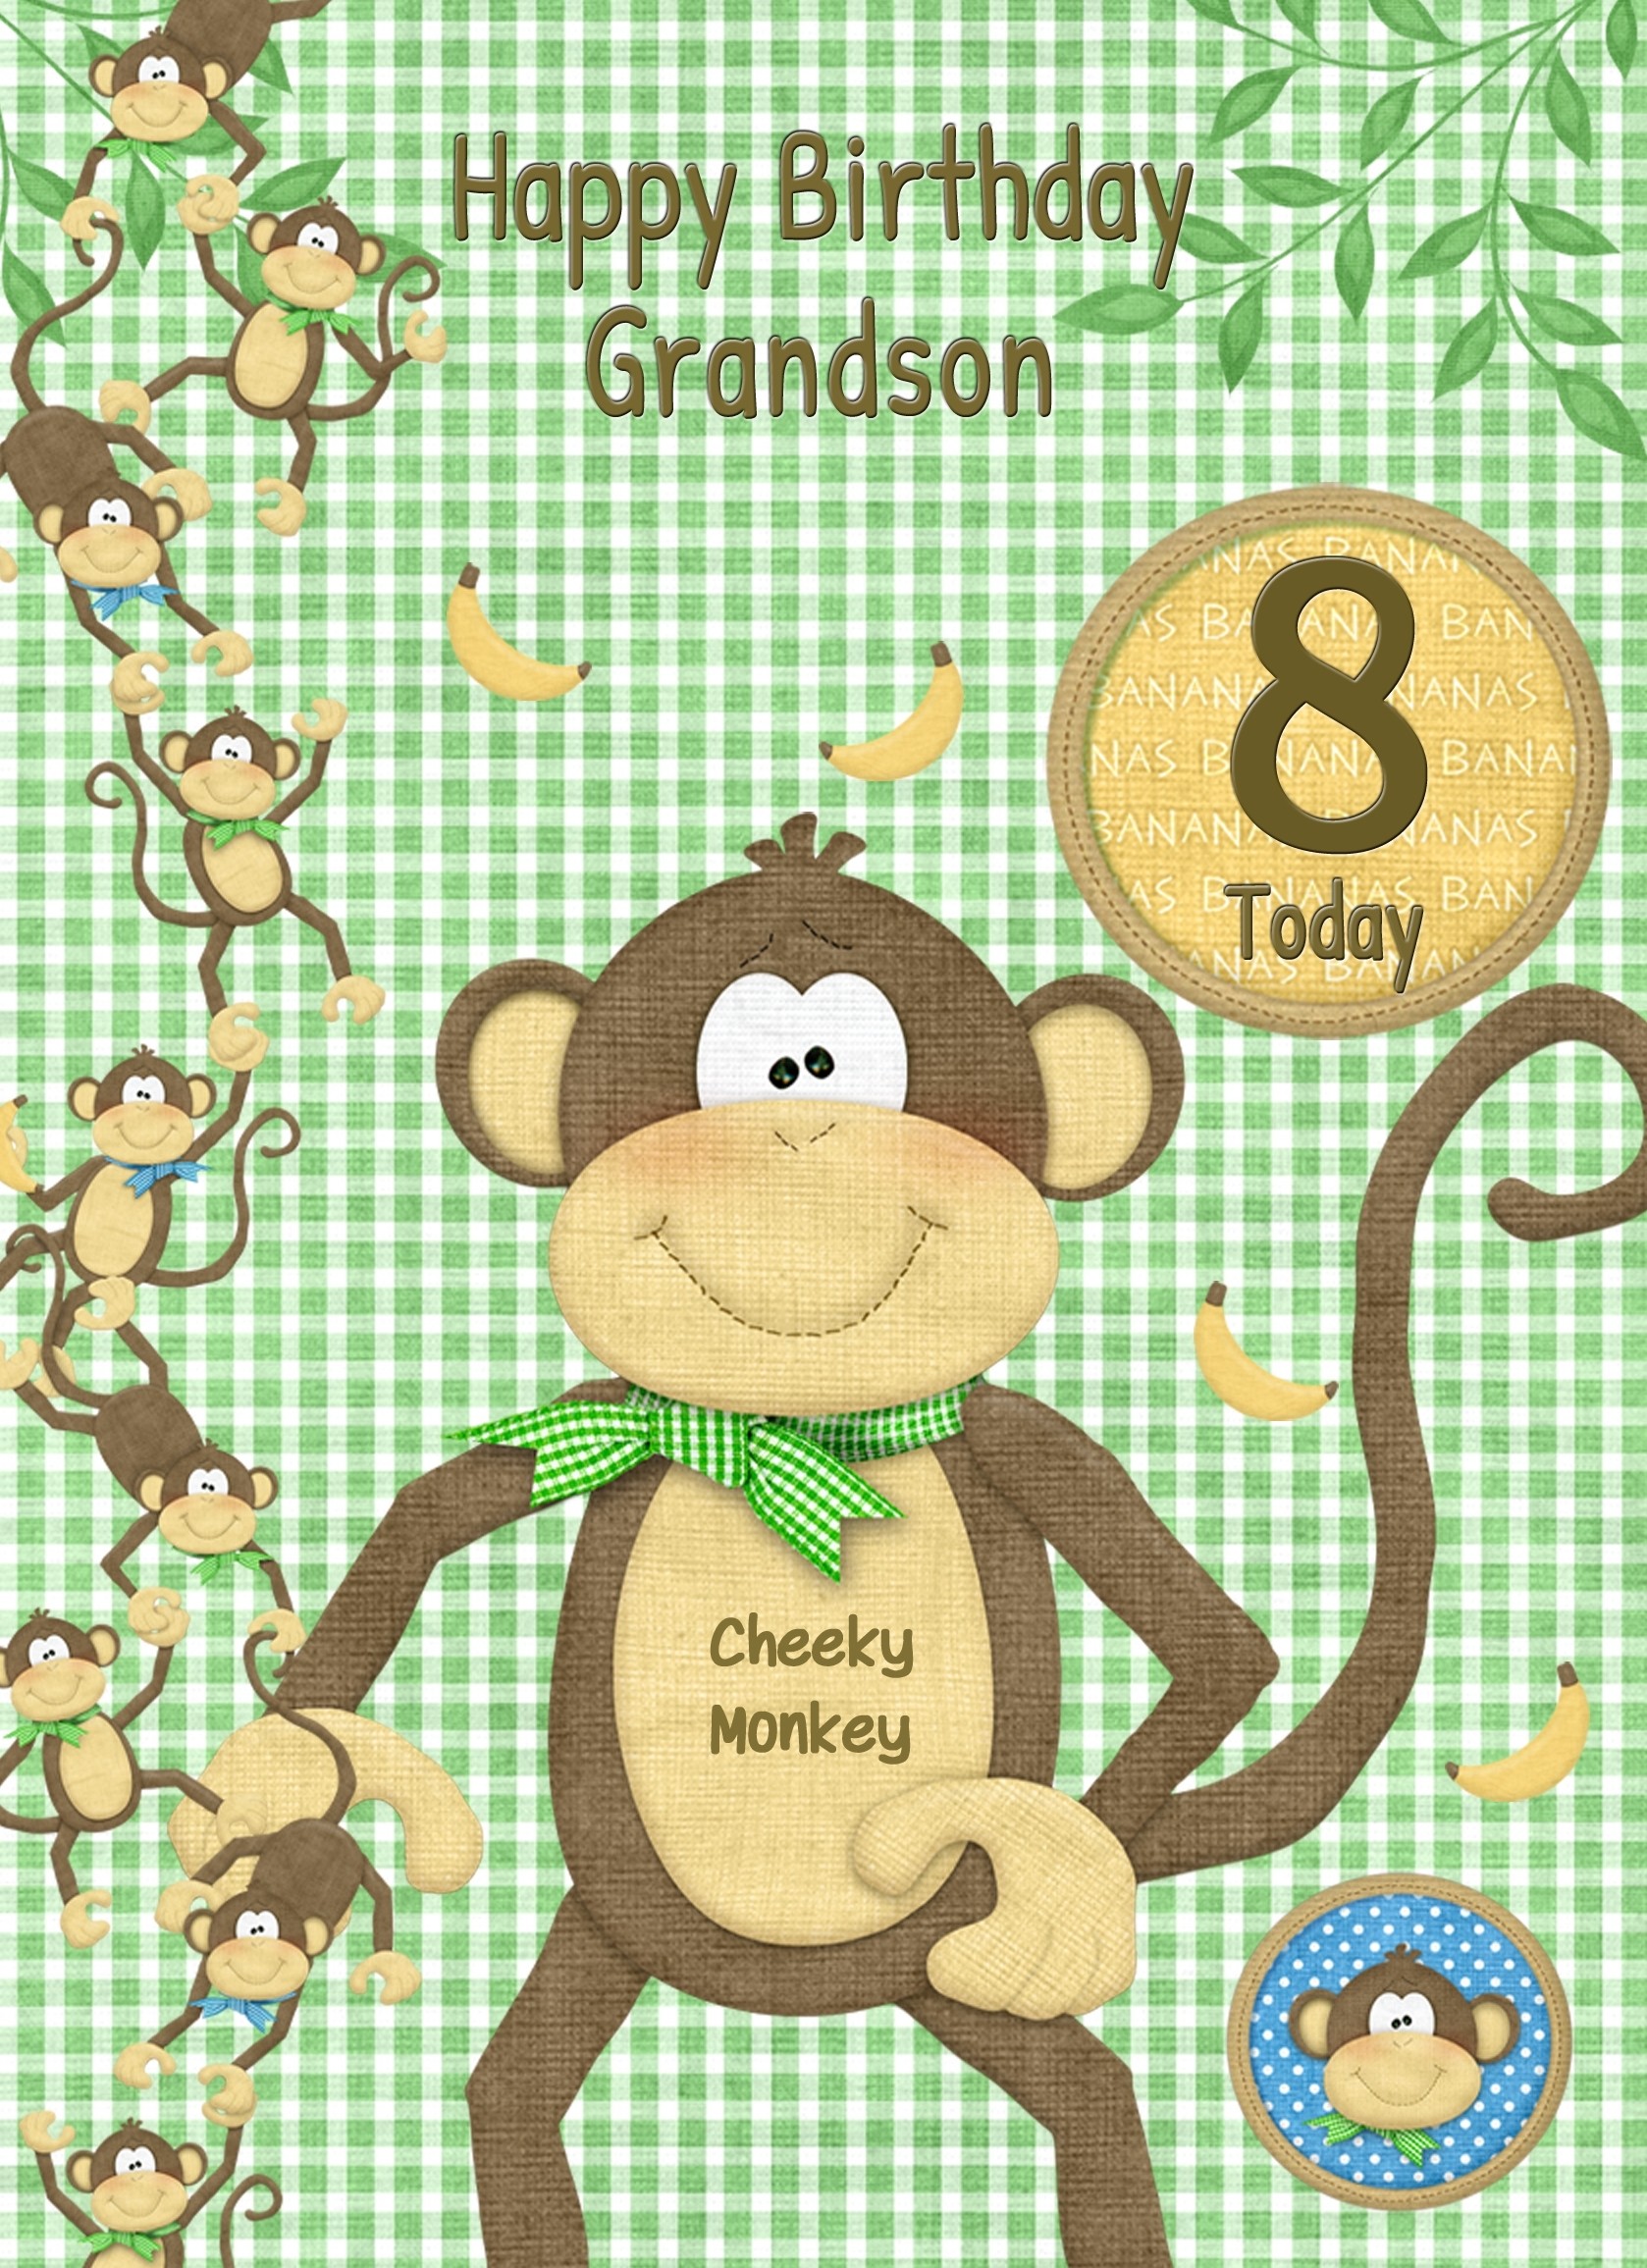 Kids 8th Birthday Cheeky Monkey Cartoon Card for Grandson